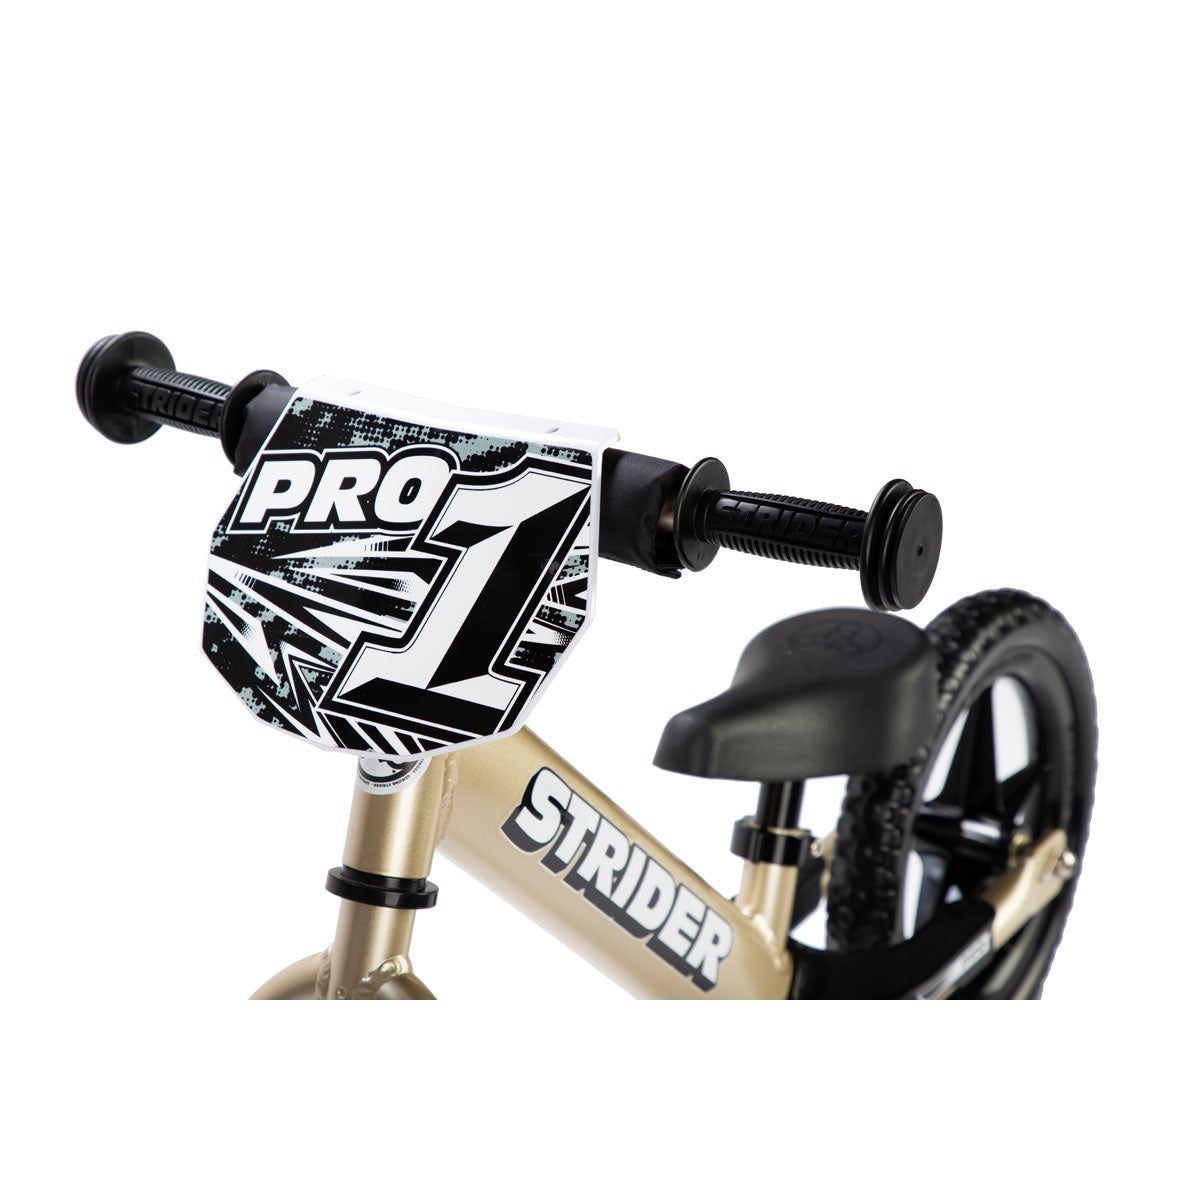 Strider 12 Pro Balance Bike